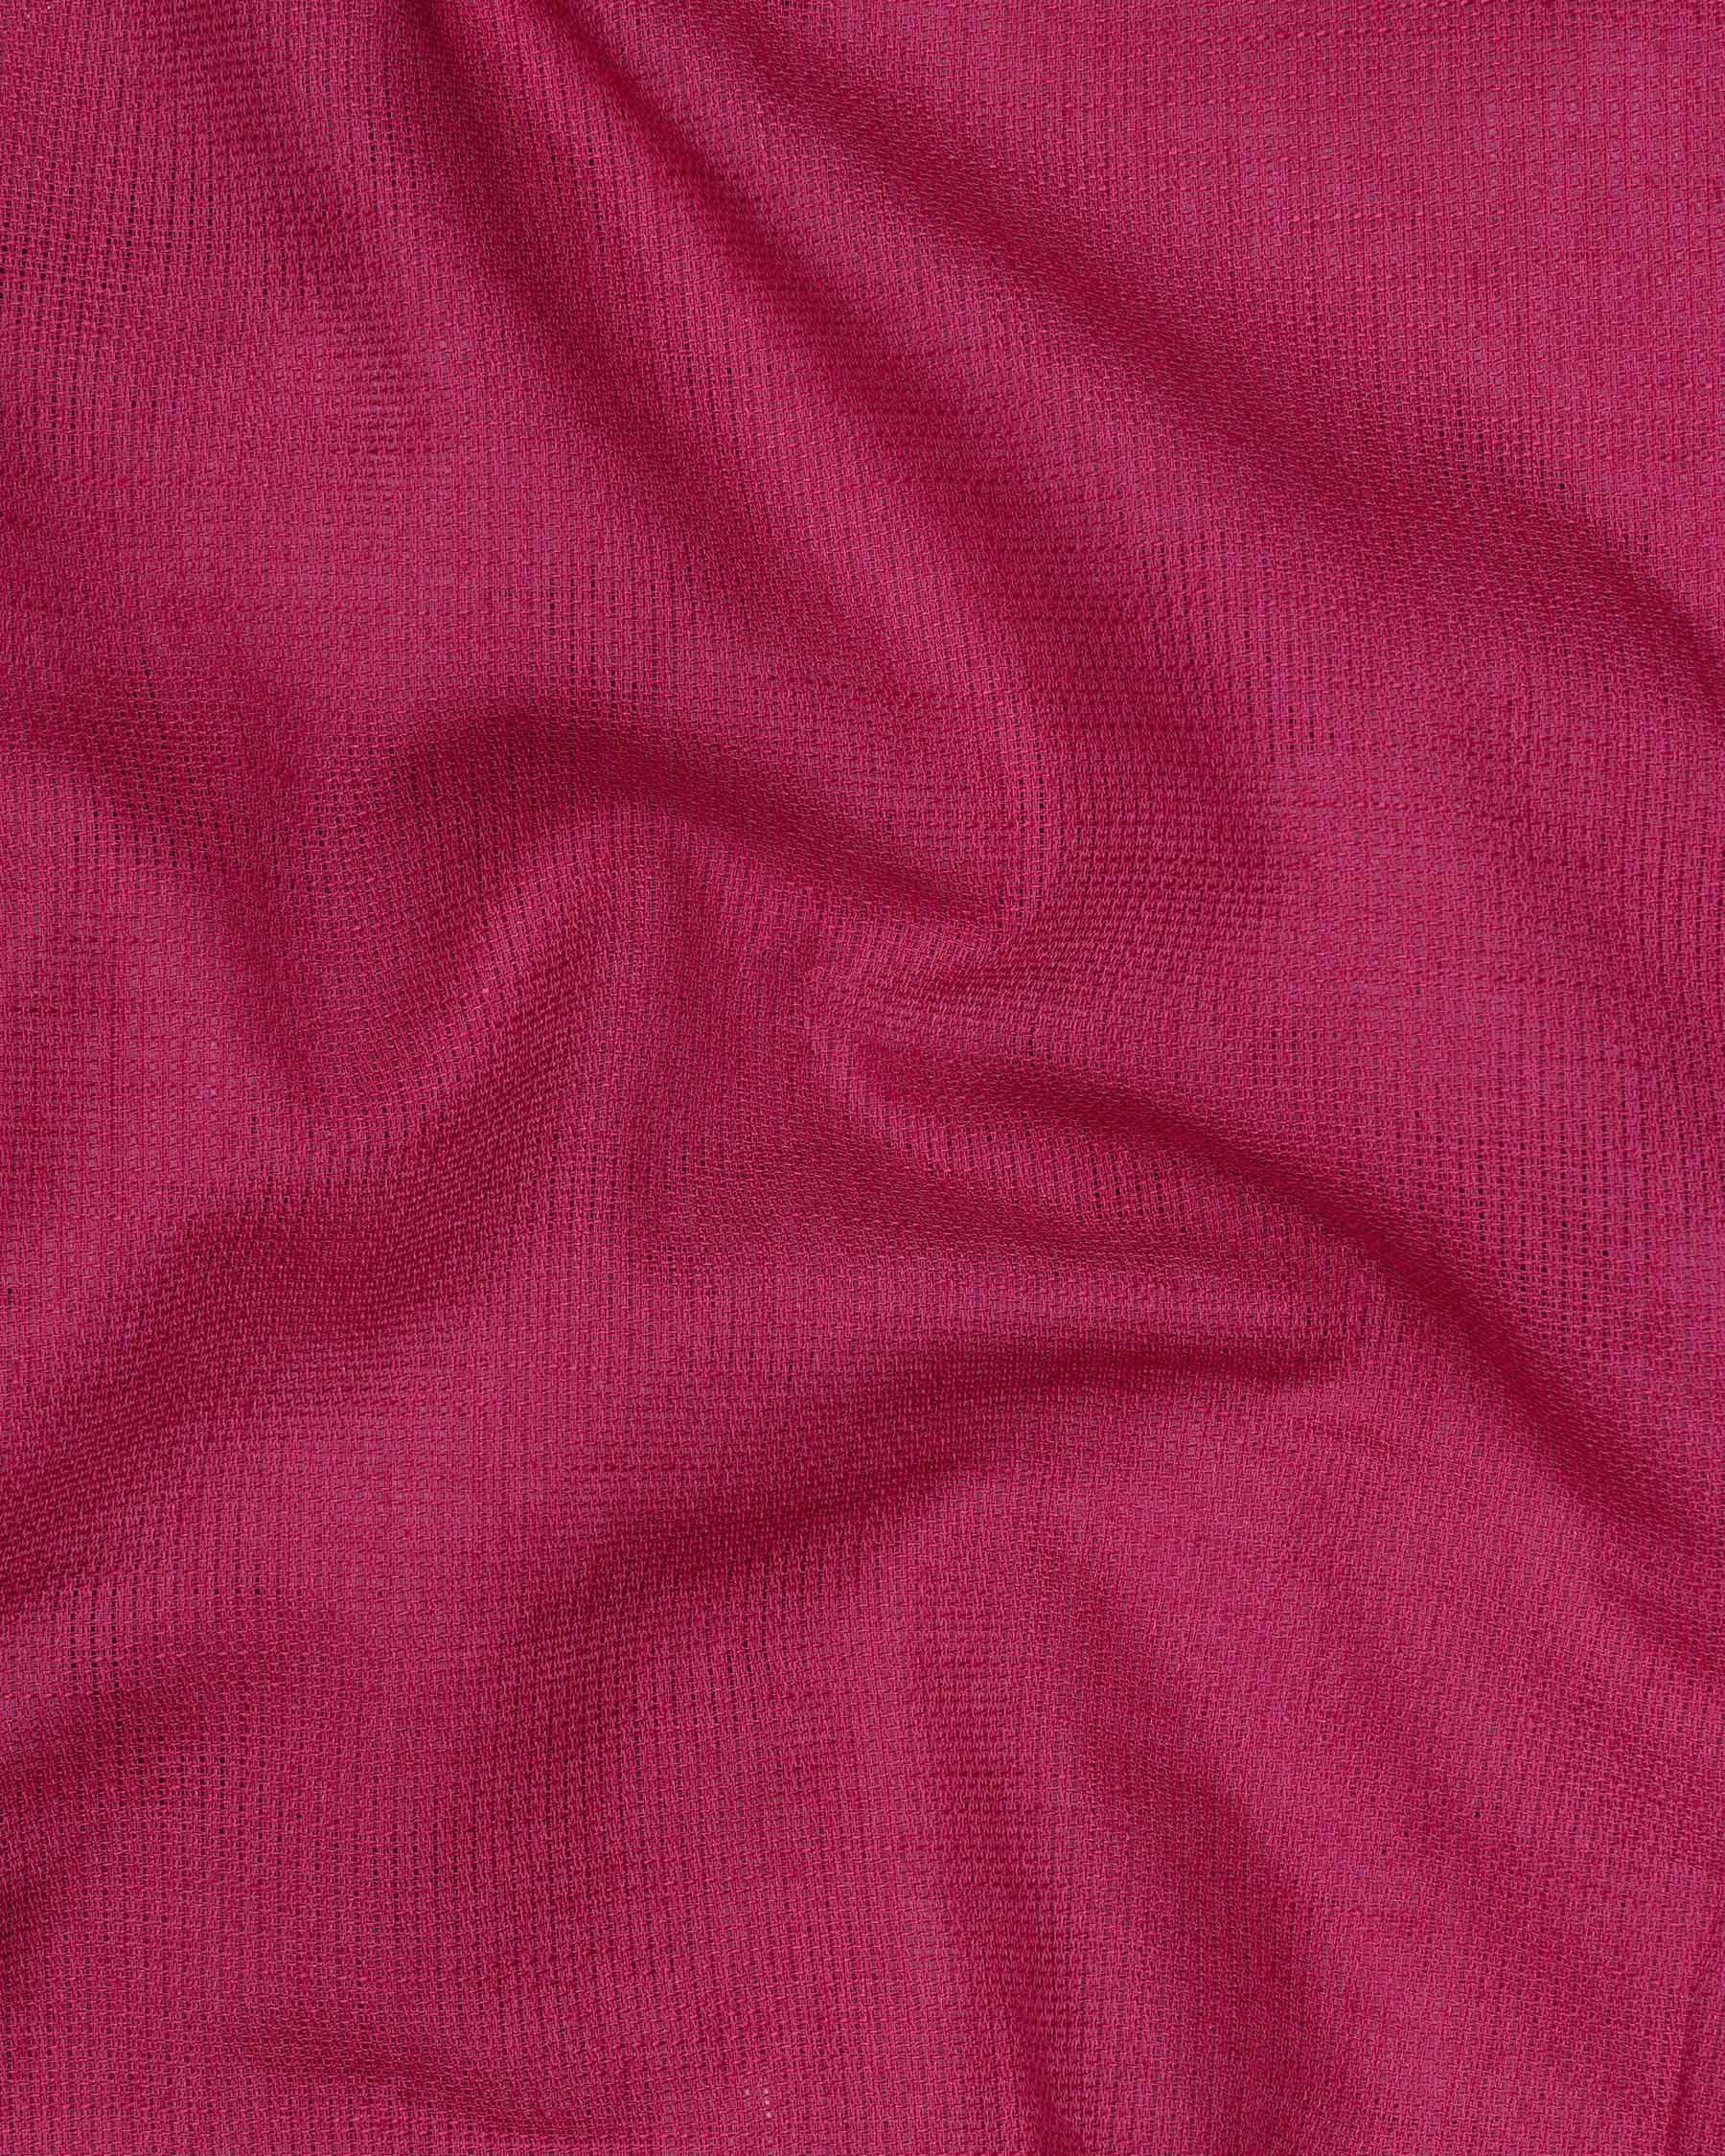 Mulberry Pink Dobby Textured Premium Giza Cotton Shirt 7841-BD-BLK-38, 7841-BD-BLK-H-38, 7841-BD-BLK-39, 7841-BD-BLK-H-39, 7841-BD-BLK-40, 7841-BD-BLK-H-40, 7841-BD-BLK-42, 7841-BD-BLK-H-42, 7841-BD-BLK-44, 7841-BD-BLK-H-44, 7841-BD-BLK-46, 7841-BD-BLK-H-46, 7841-BD-BLK-48, 7841-BD-BLK-H-48, 7841-BD-BLK-50, 7841-BD-BLK-H-50, 7841-BD-BLK-52, 7841-BD-BLK-H-52